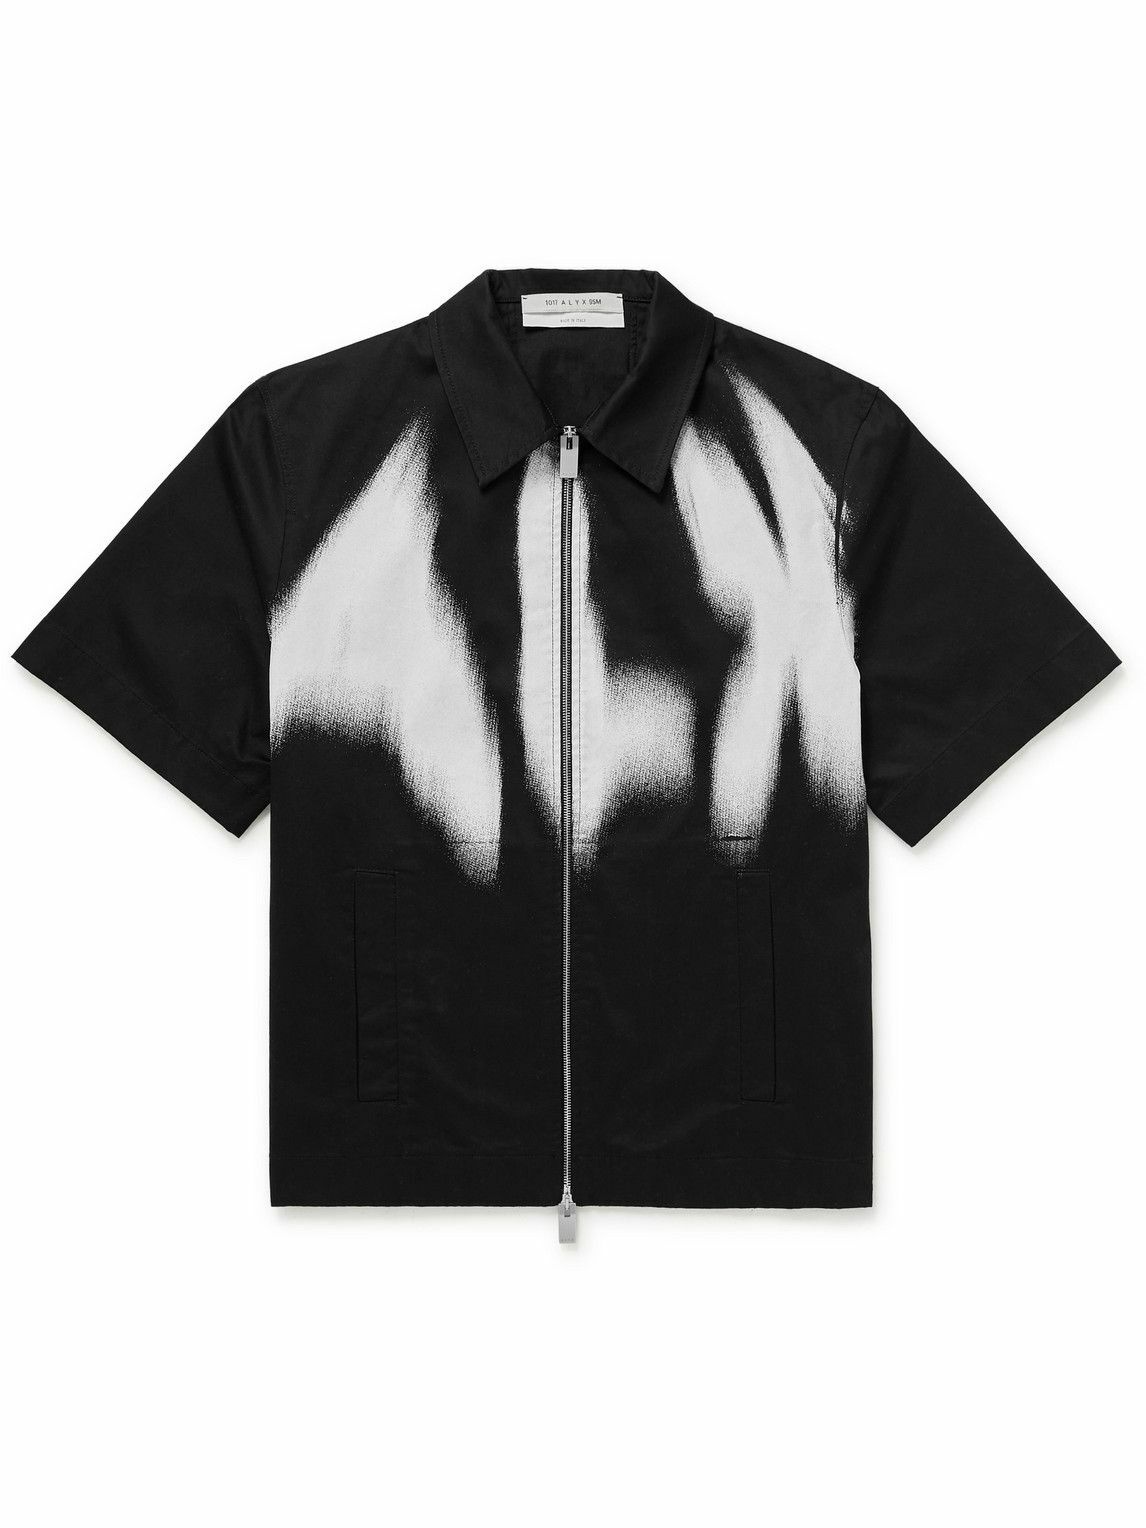 1017 ALYX 9SM - Logo-Print Cotton-Blend Zip-Up Shirt - Black 1017 ALYX 9SM